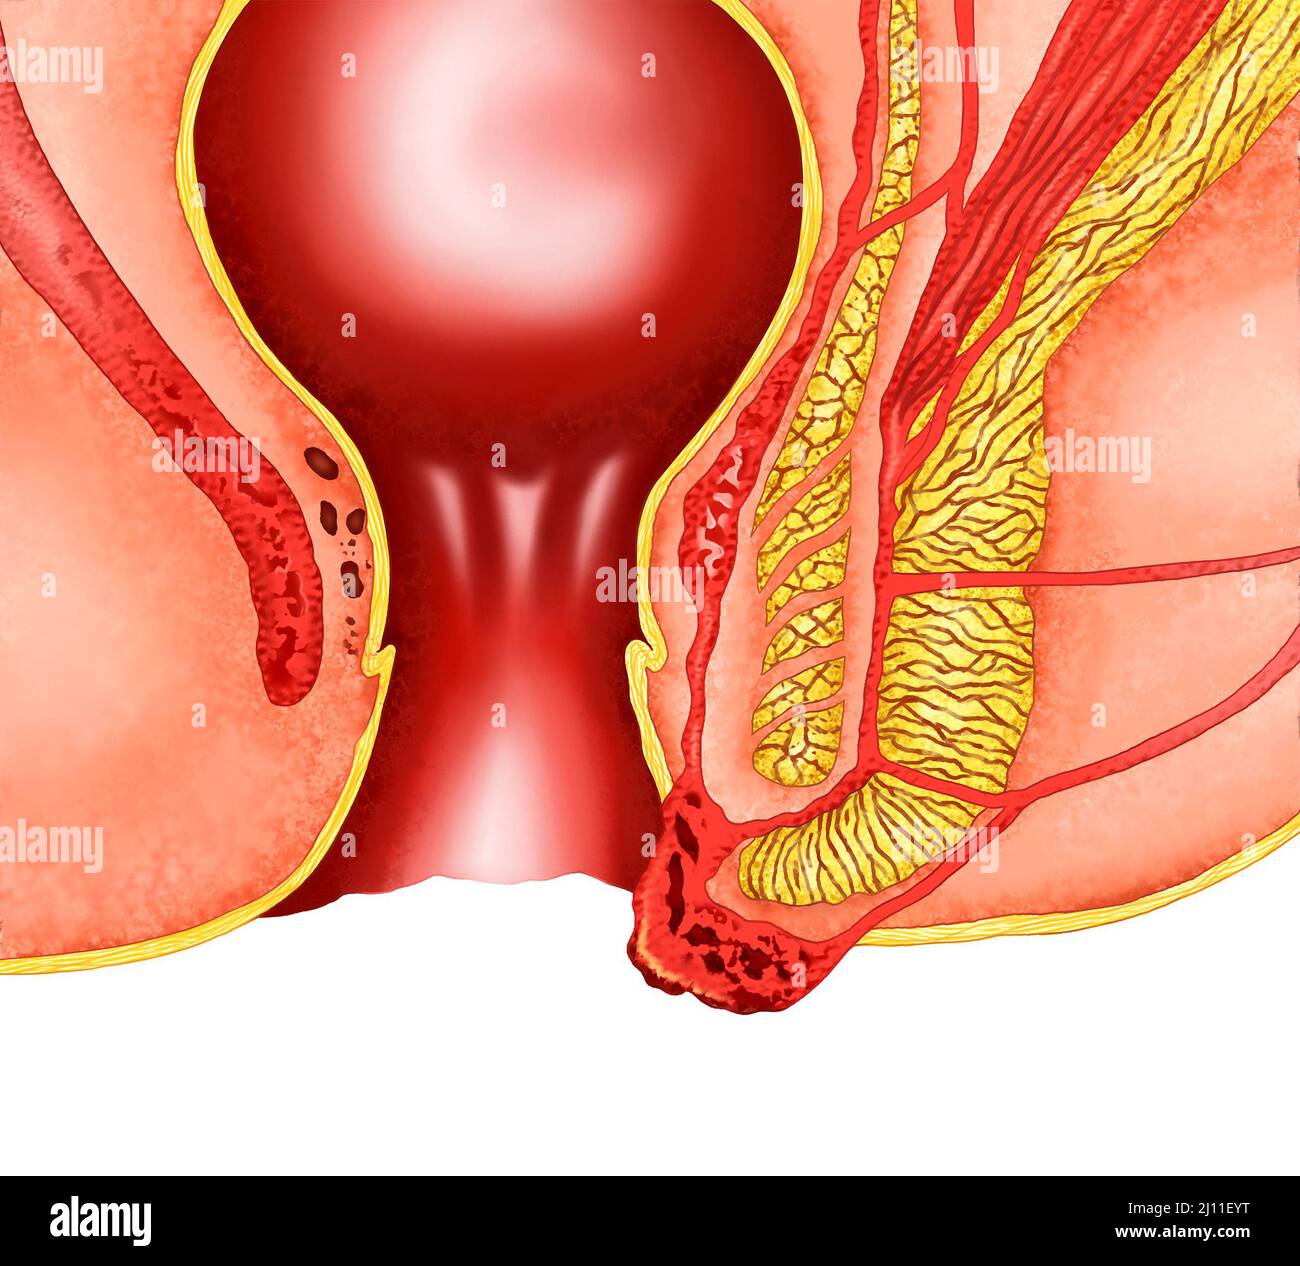 realistic illustration of the anatomy of hemorrhoids Stock Photo